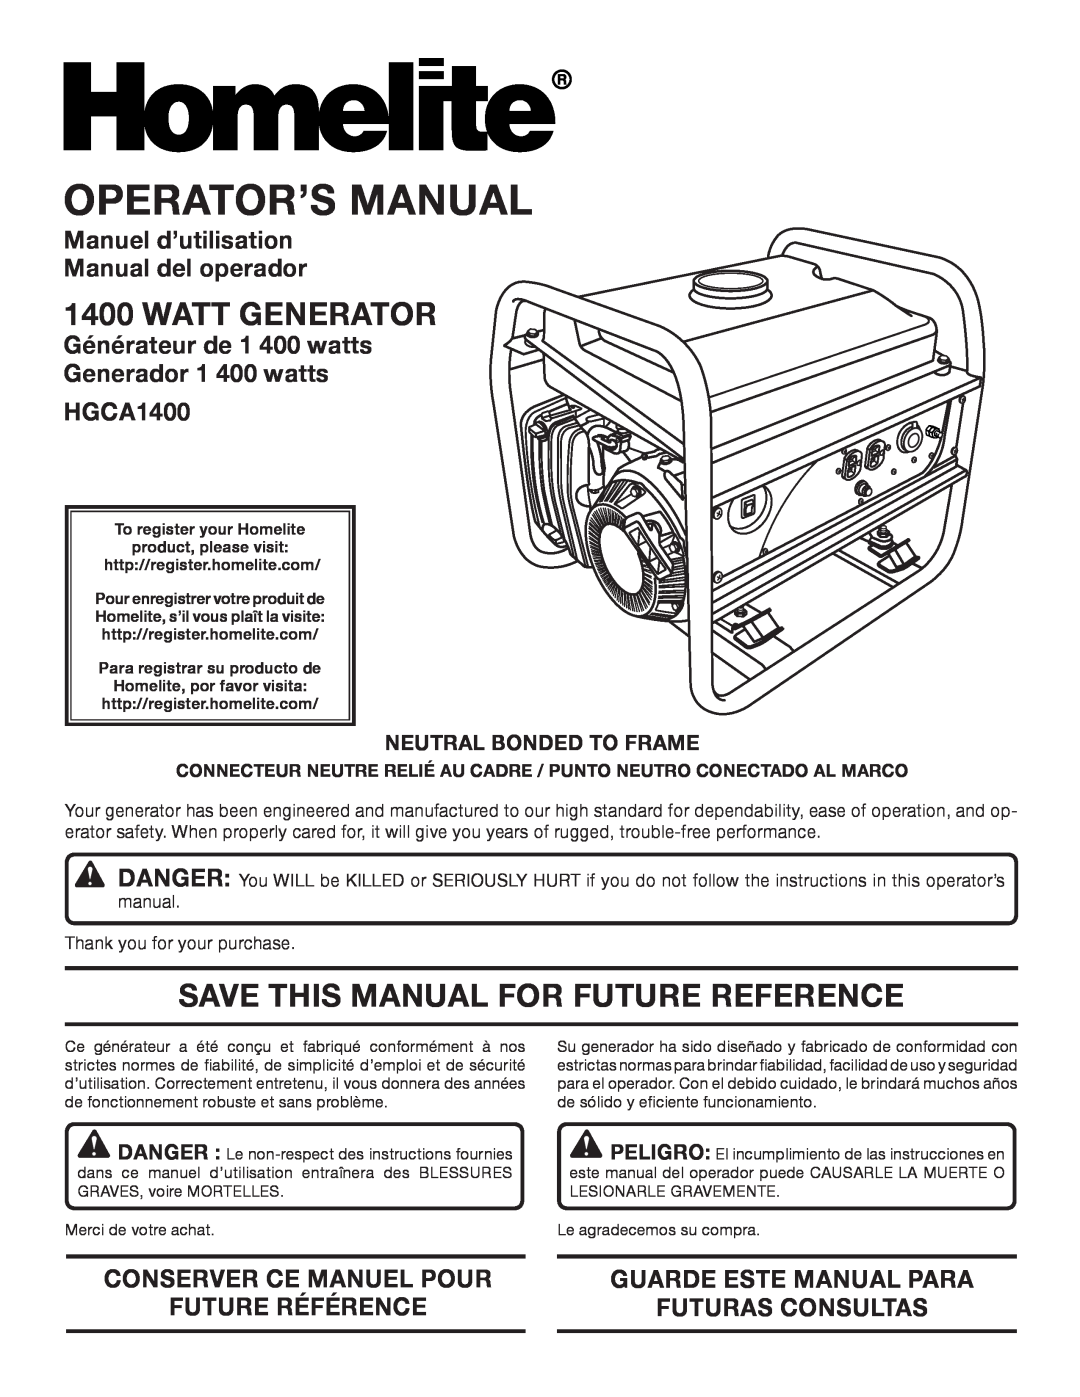 Homelite HGCA1400 manuel dutilisation Watt Generator, Save This Manual For Future Reference, Operator’S Manual 